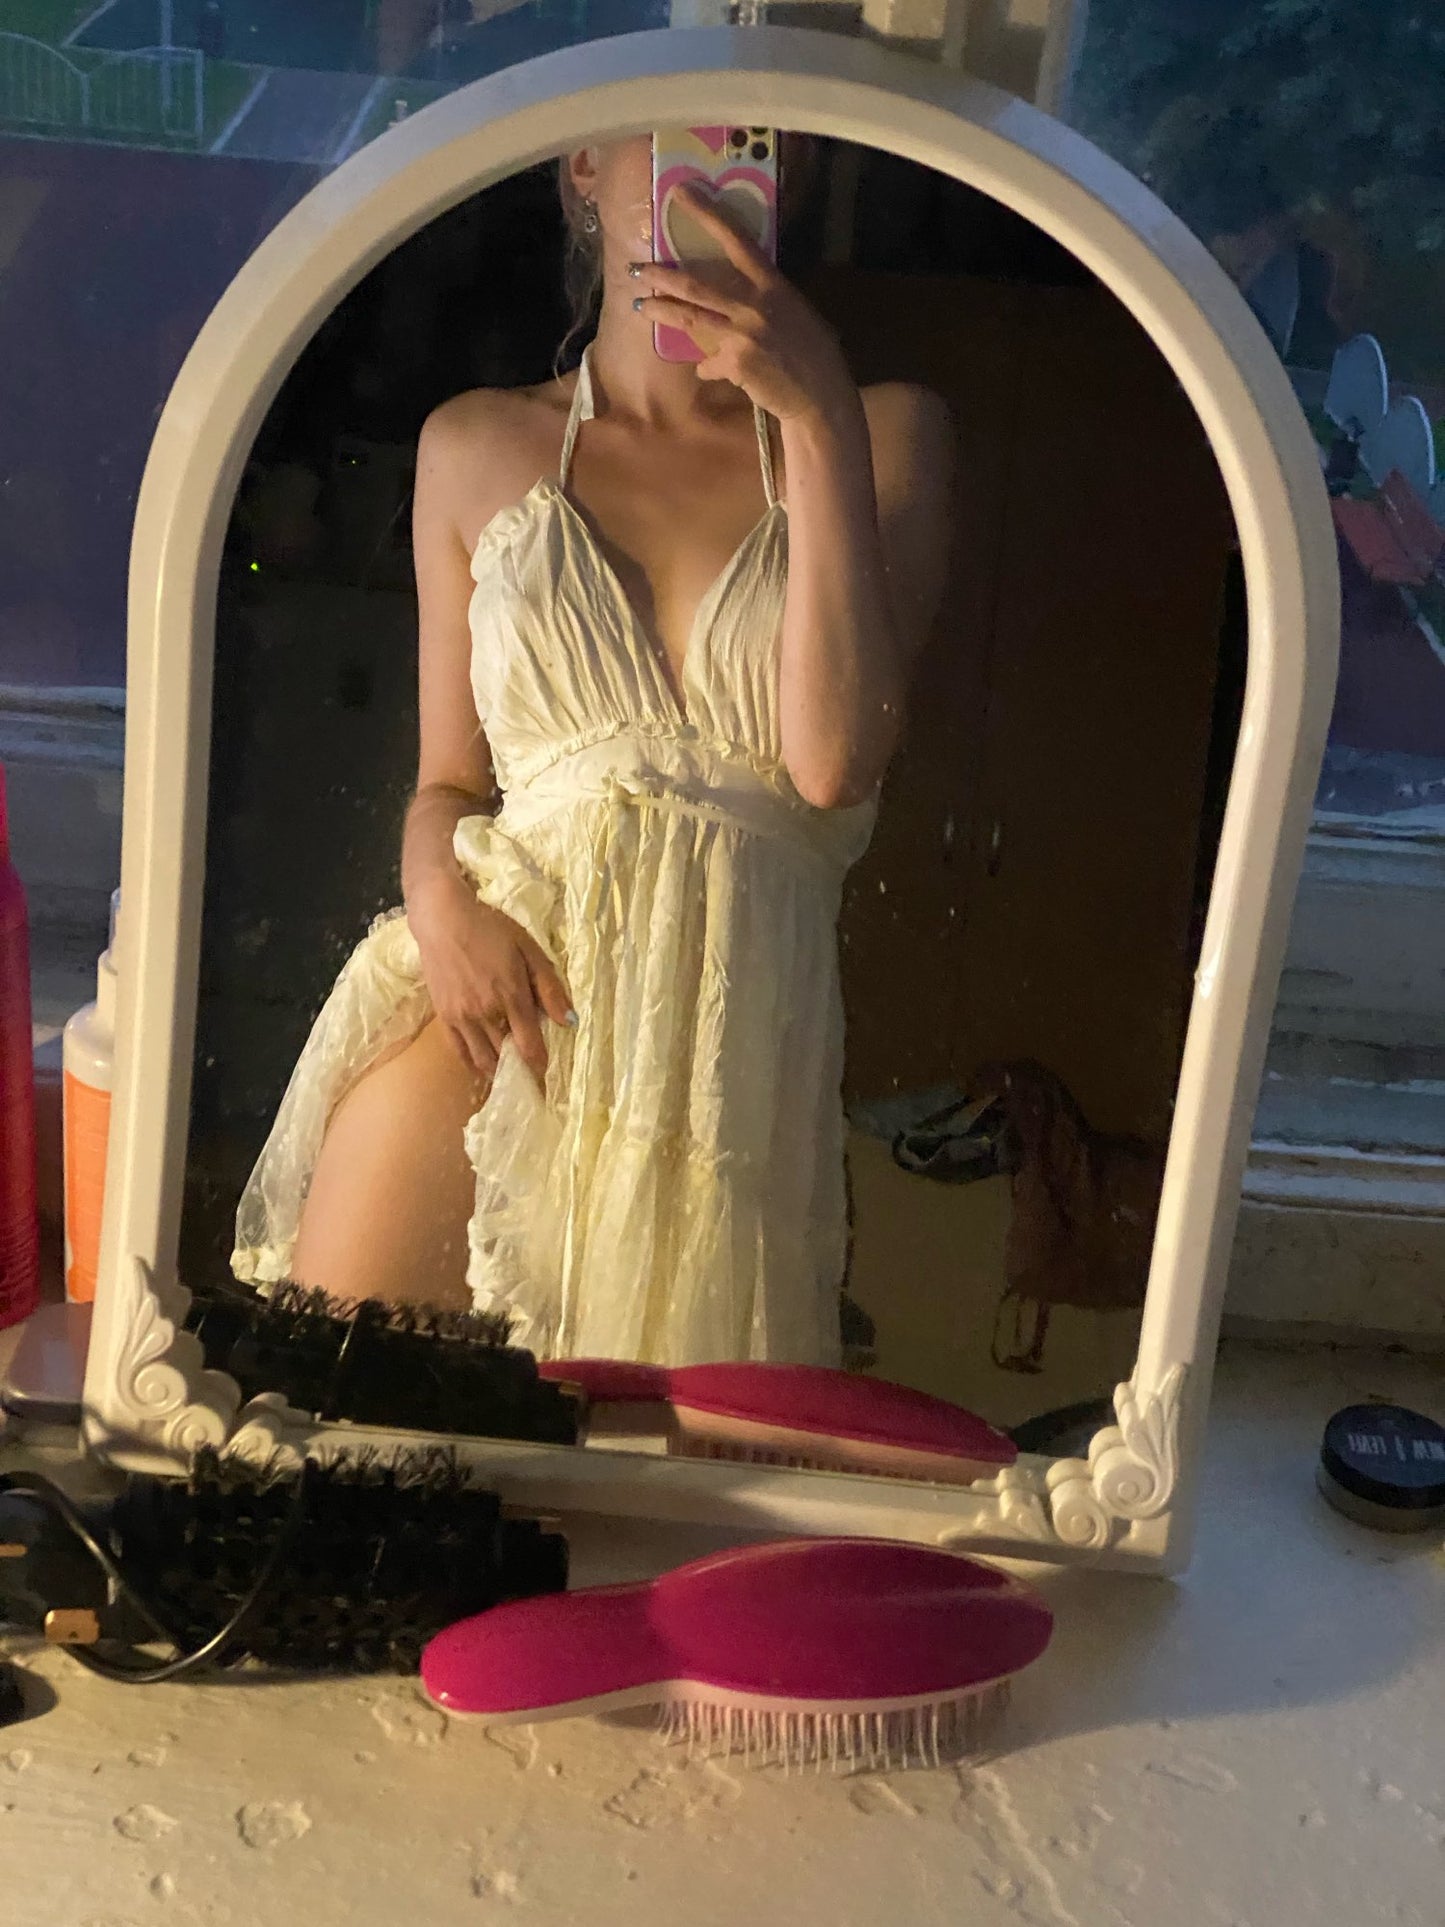 SheMujerSky Sexy Backless Lace Spliced Dress Summer Halter V-neck Mini Dresses Woman Dress Elegant Evening